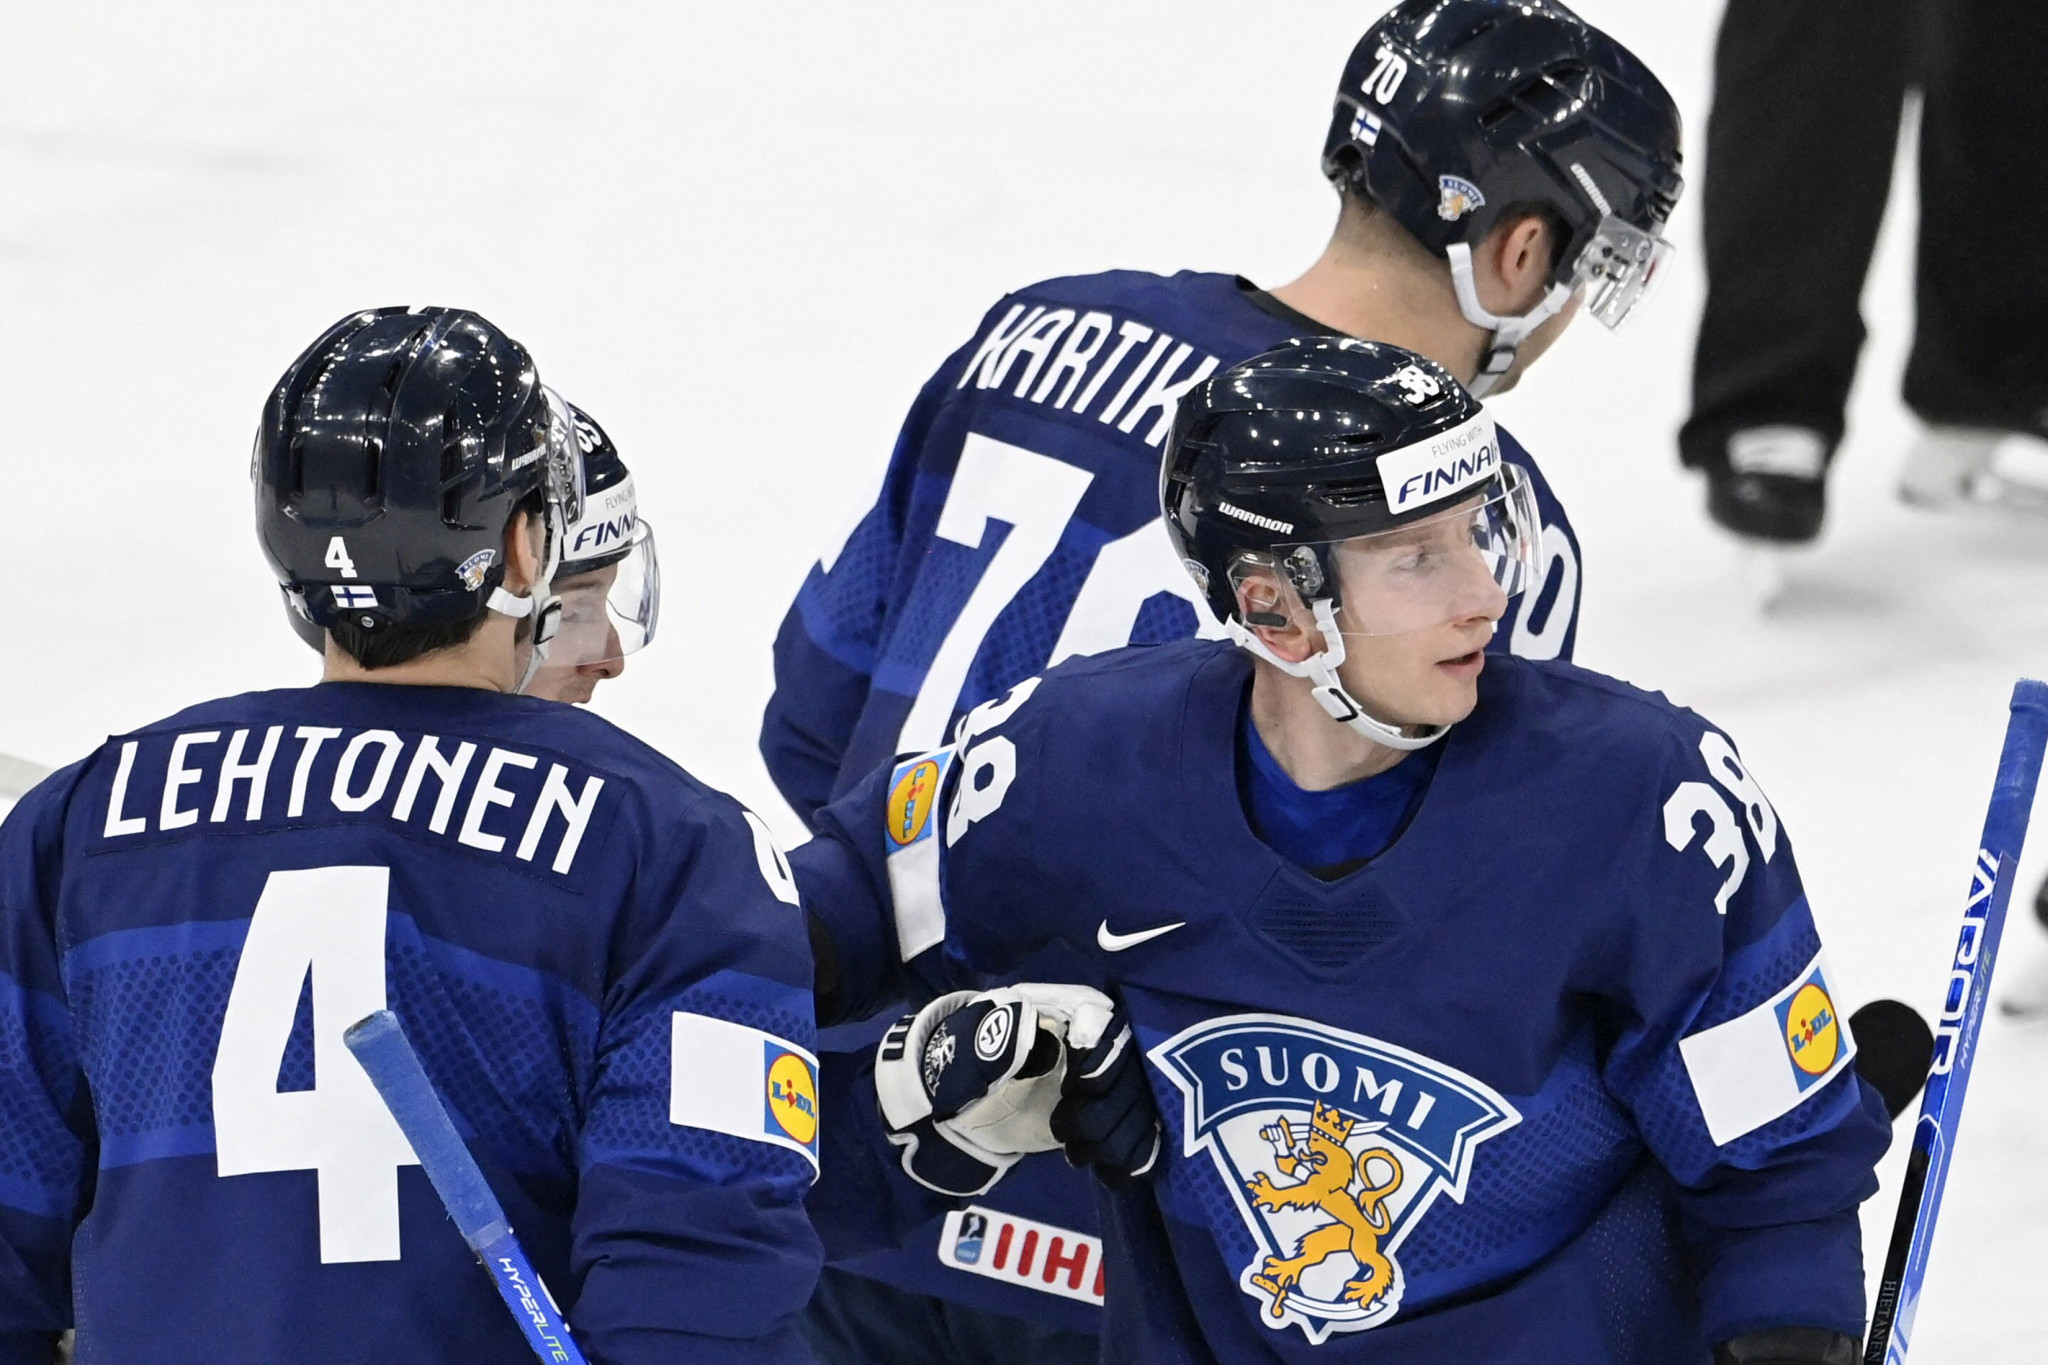 Olympic champions Finland thrash Britain at IIHF World Championship